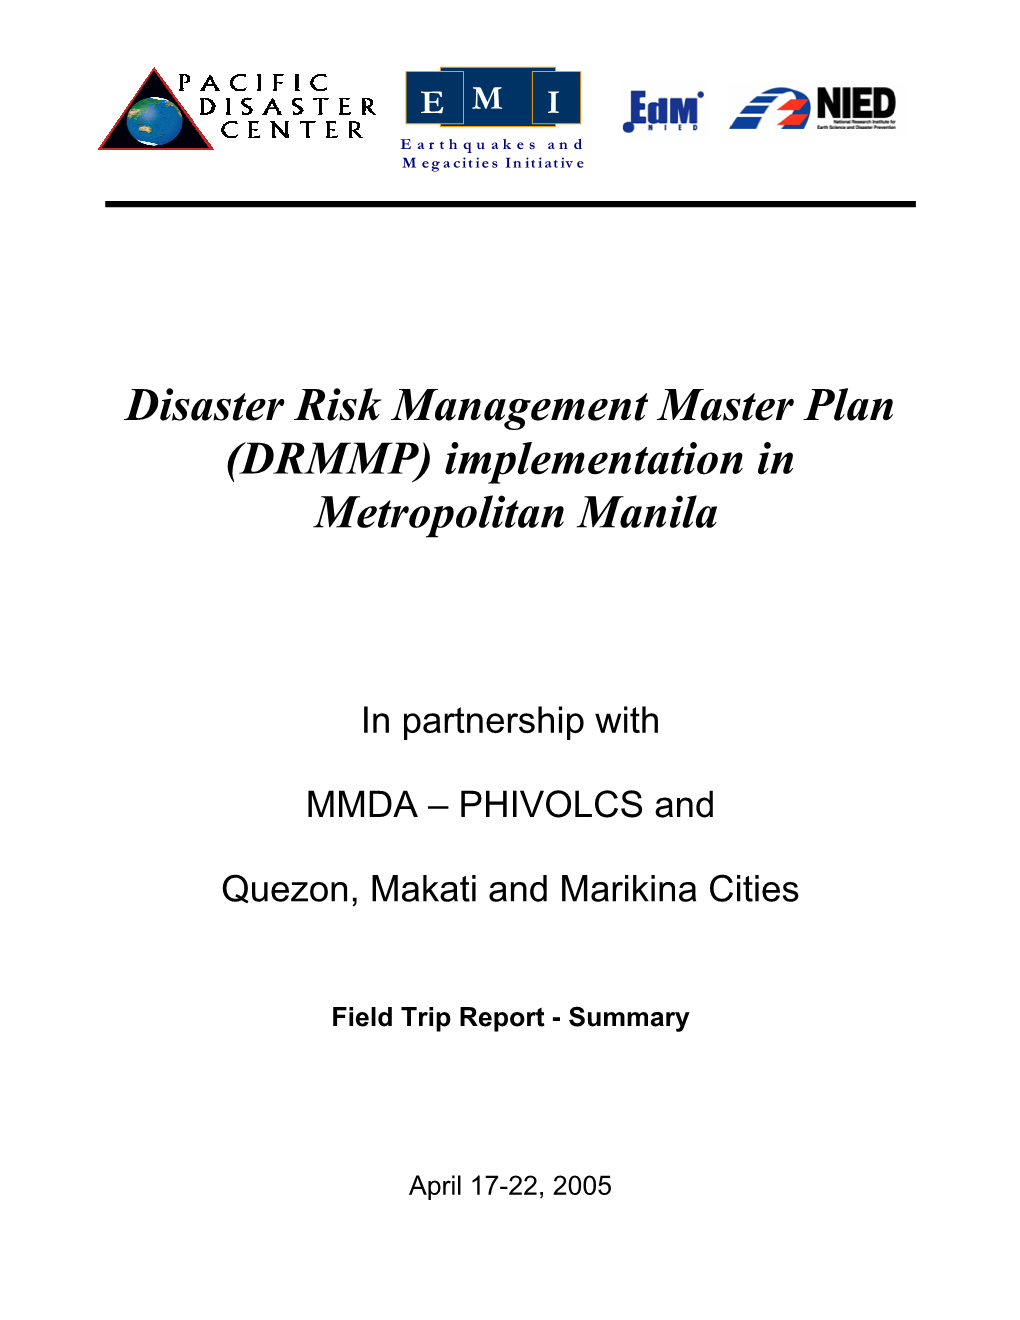 Disaster Risk Management Master Plan (DRMMP) Implementation in Metropolitan Manila